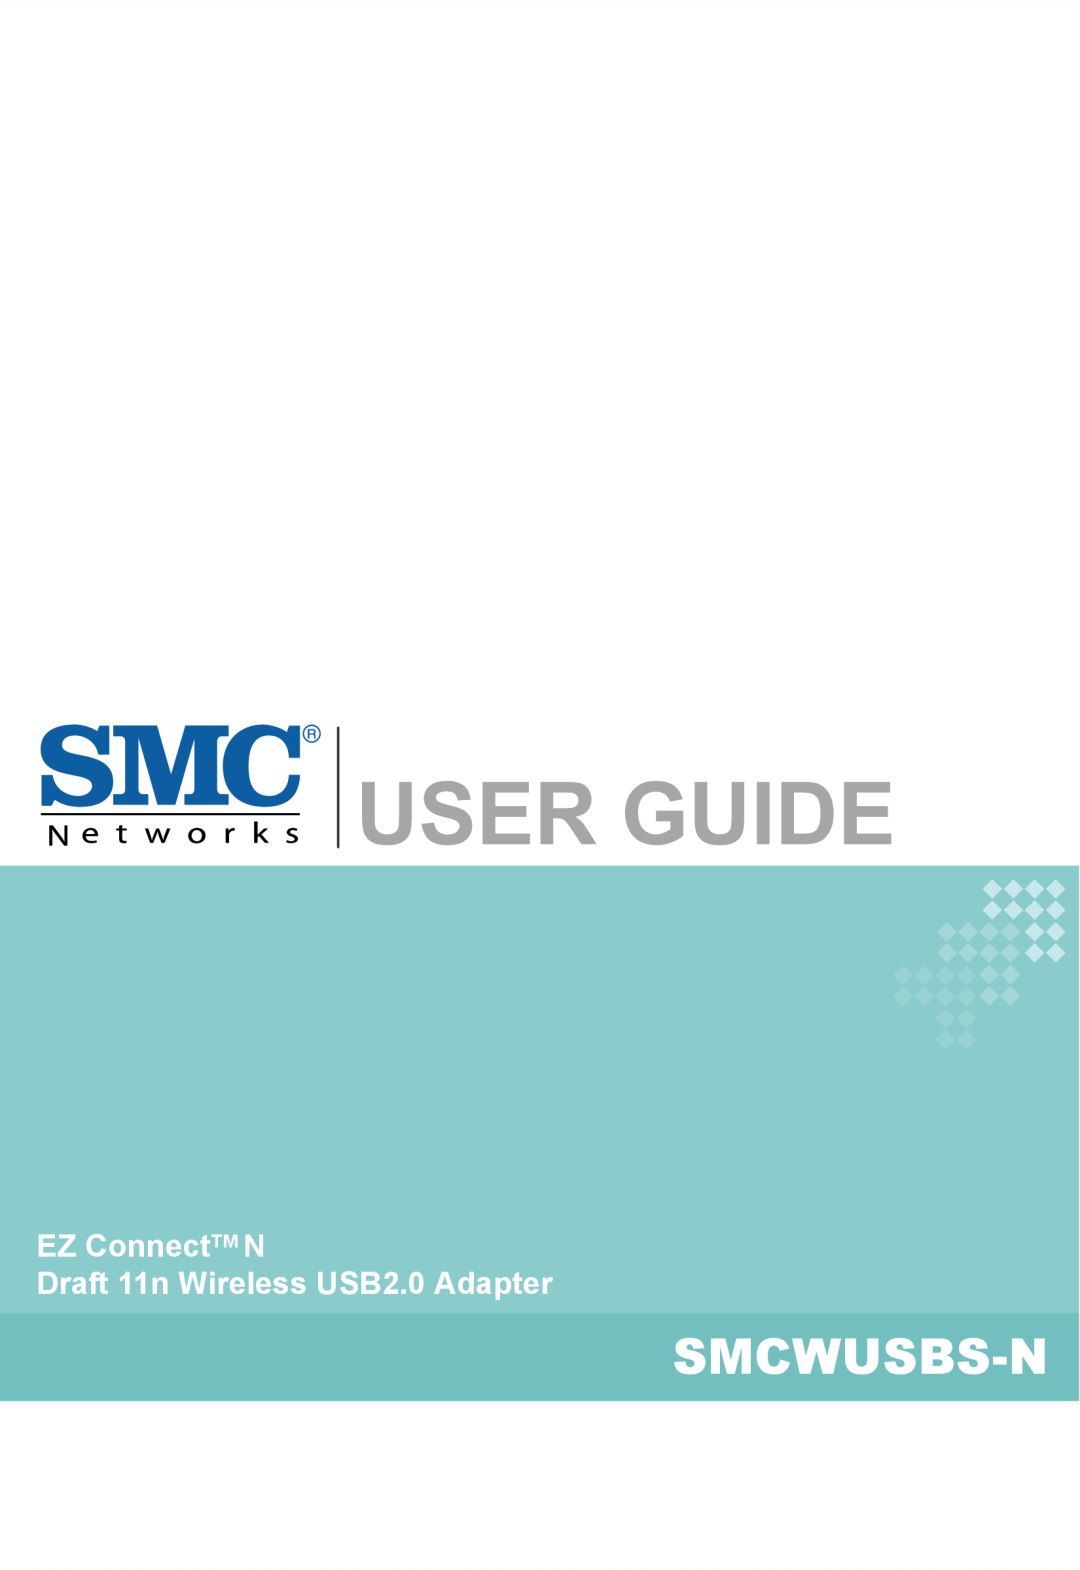 SMC Networks SMCWUSBS-N manual Smcwusbs-N, EZ ConnectTM N Draft 11n Wireless USB2.0 Adapter 